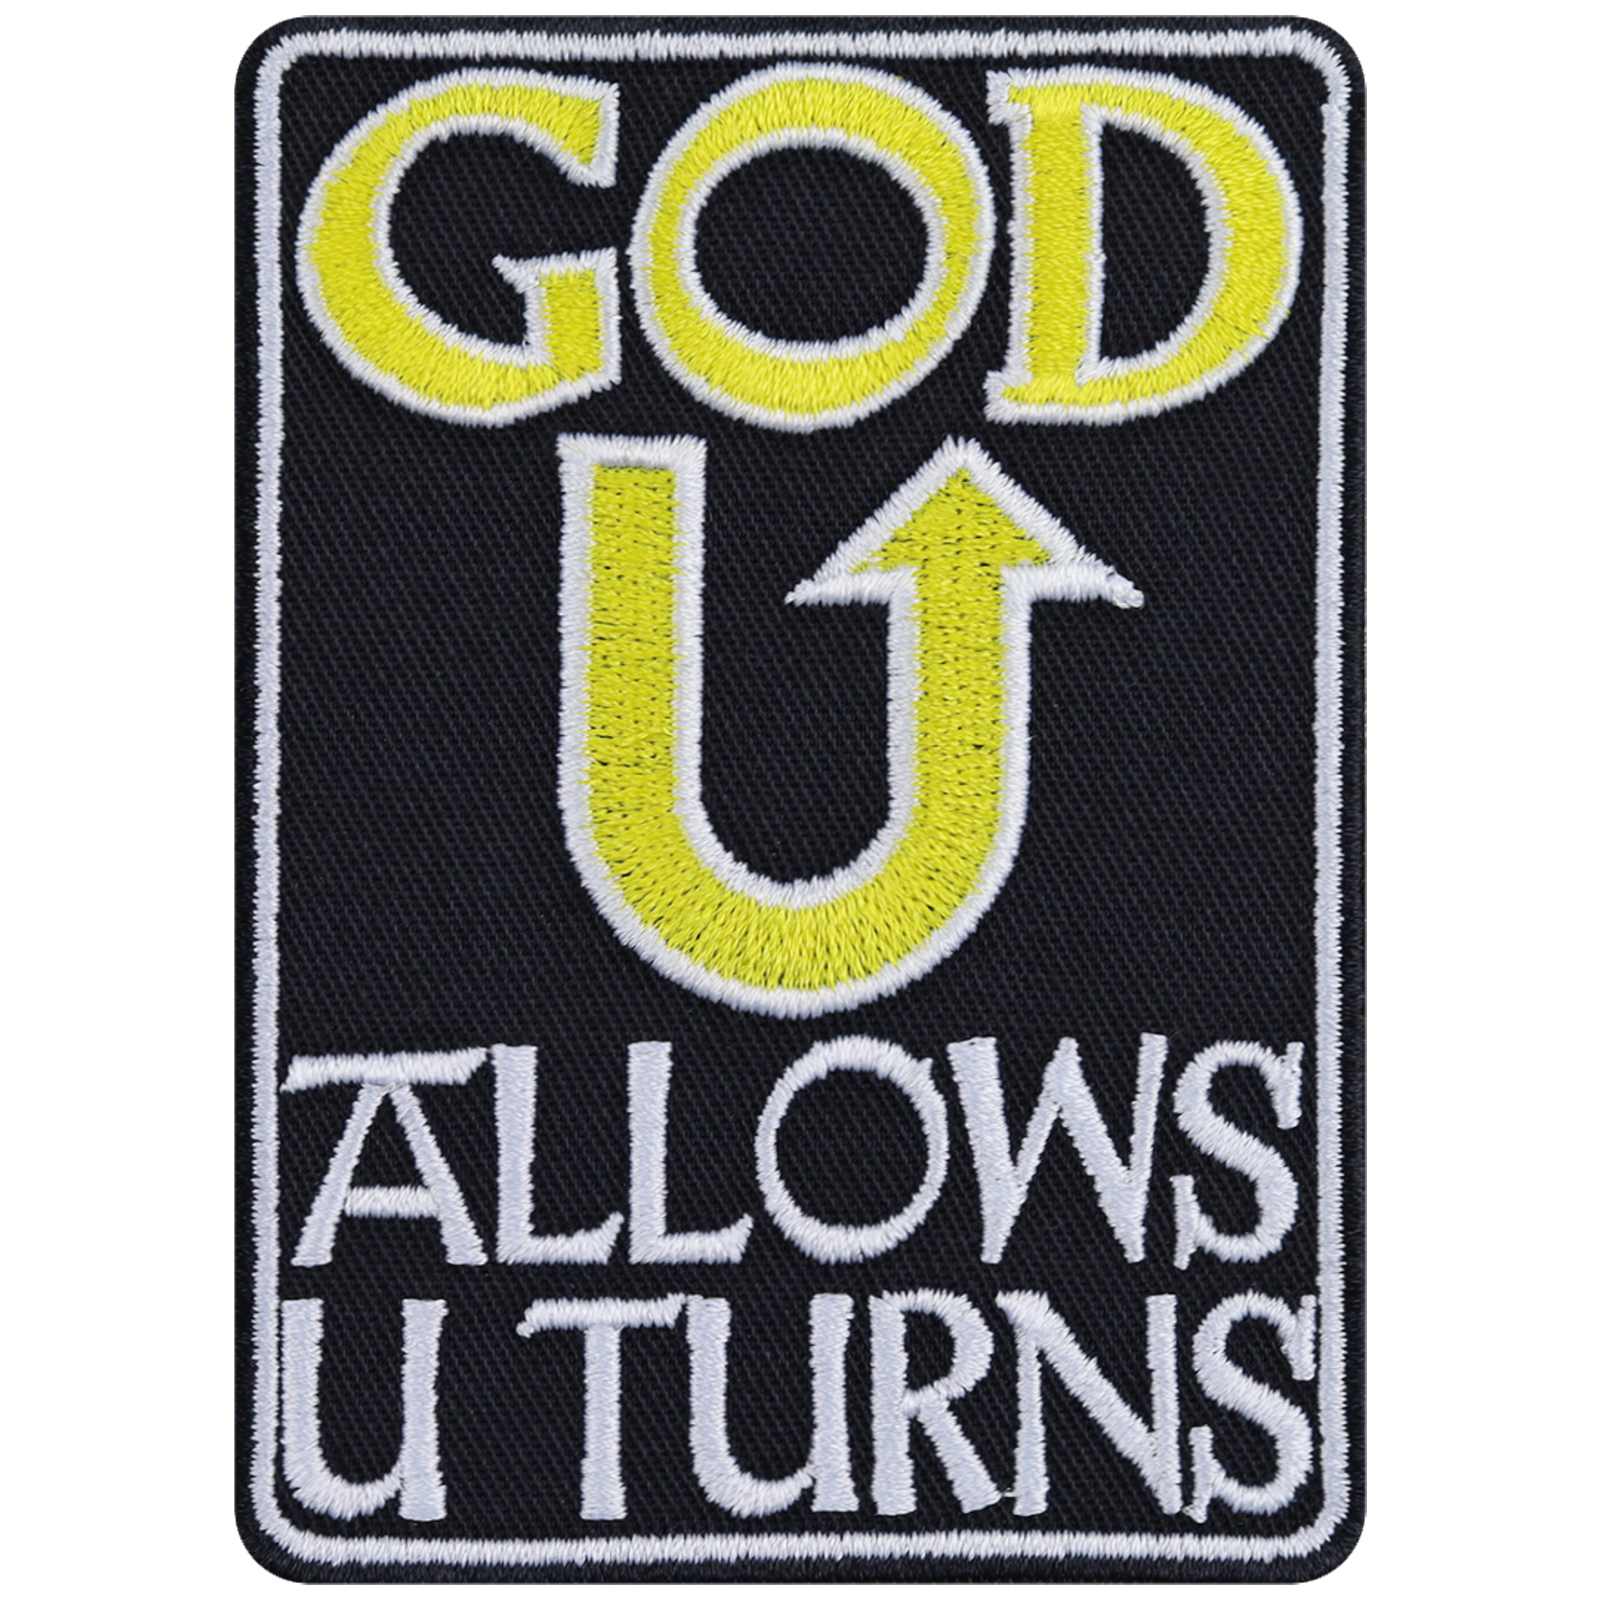 God allows u turns - Patch